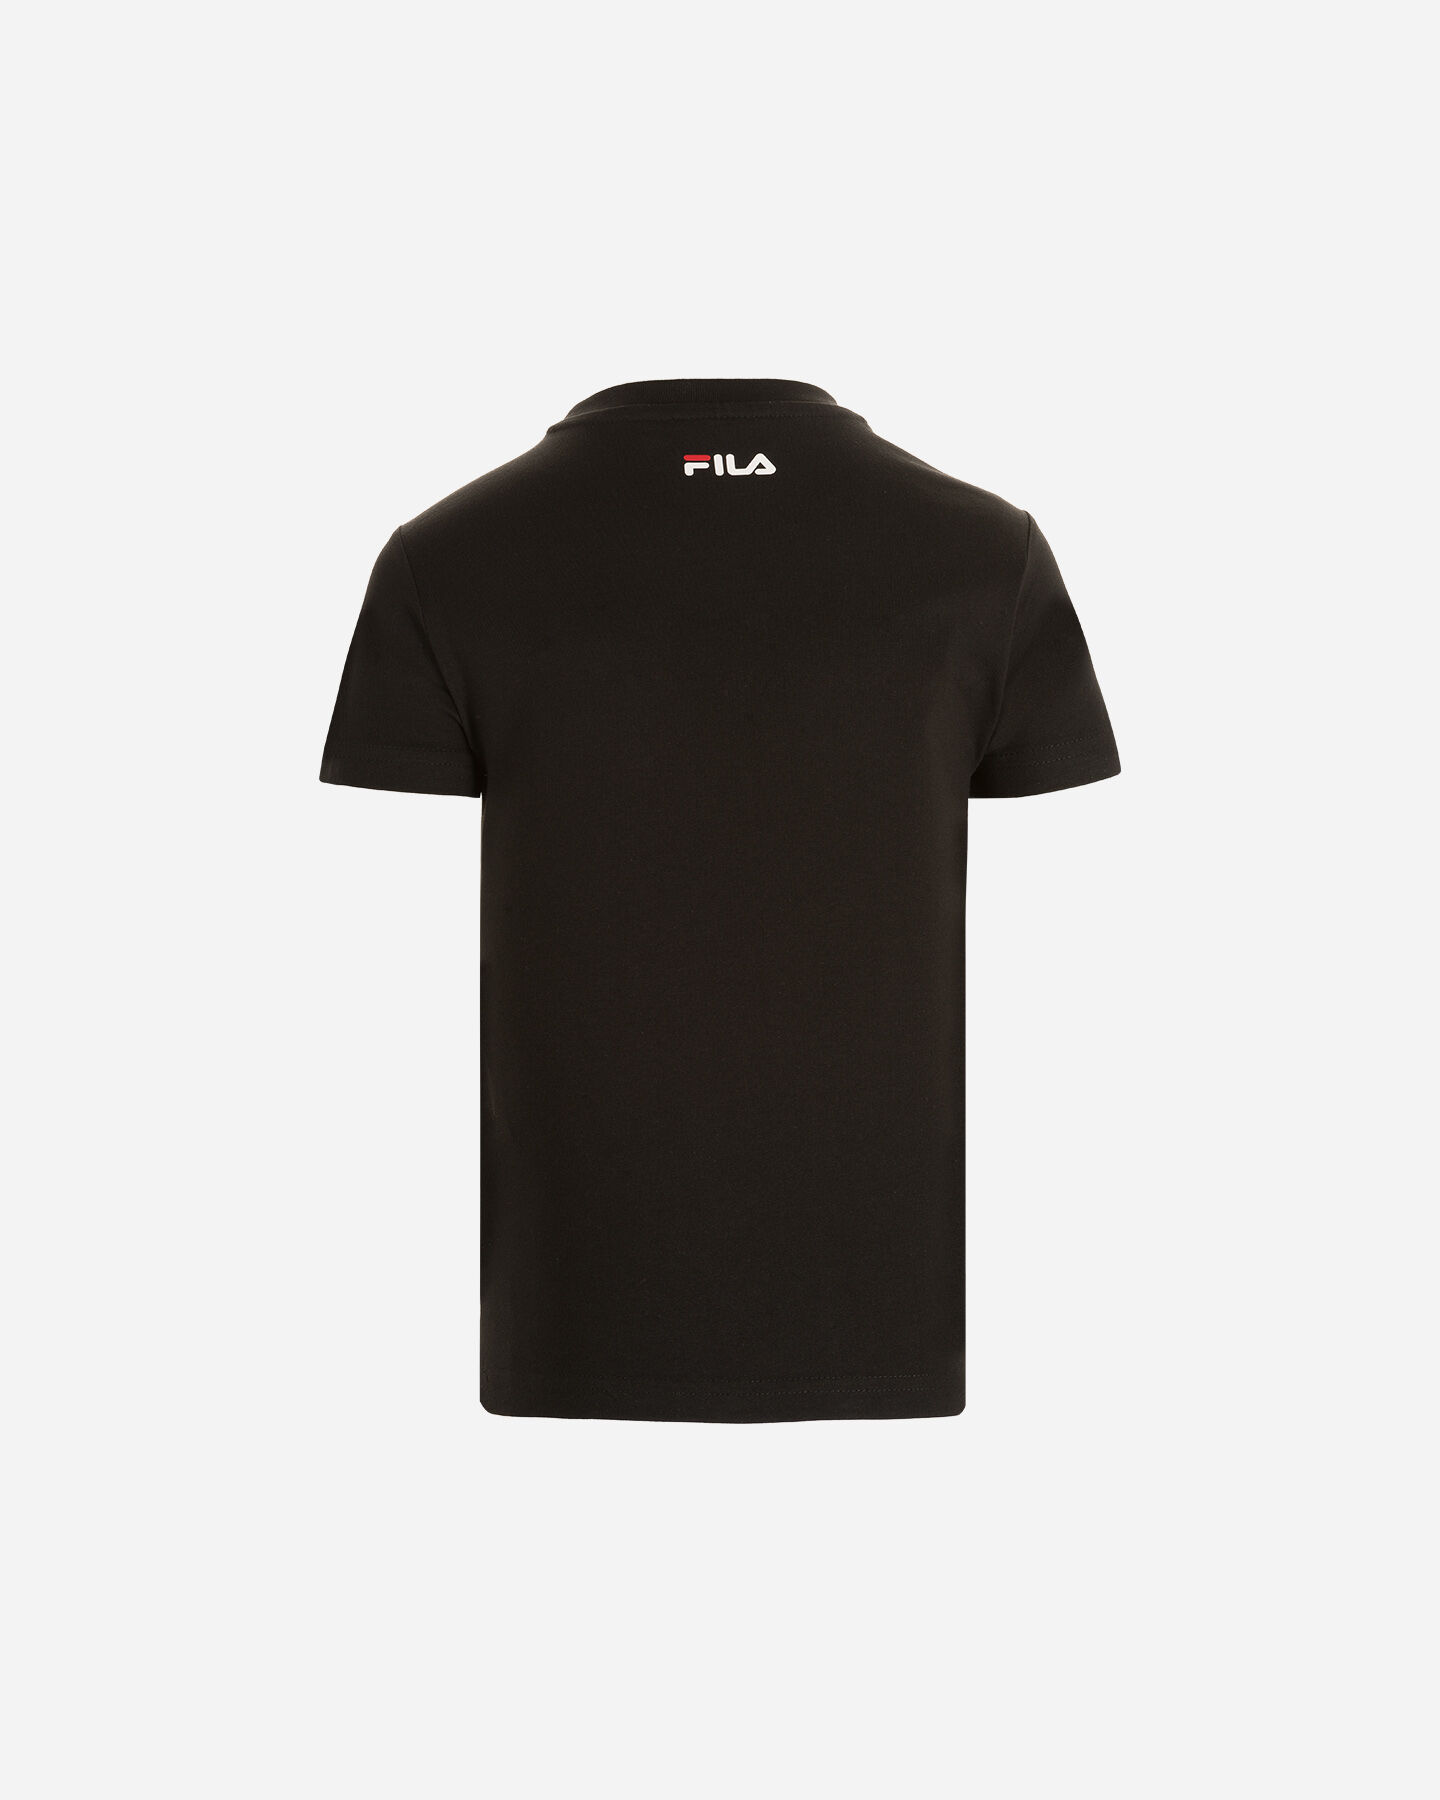  T-Shirt FILA STREETWEAR LOGO JR S4107158 scatto 1